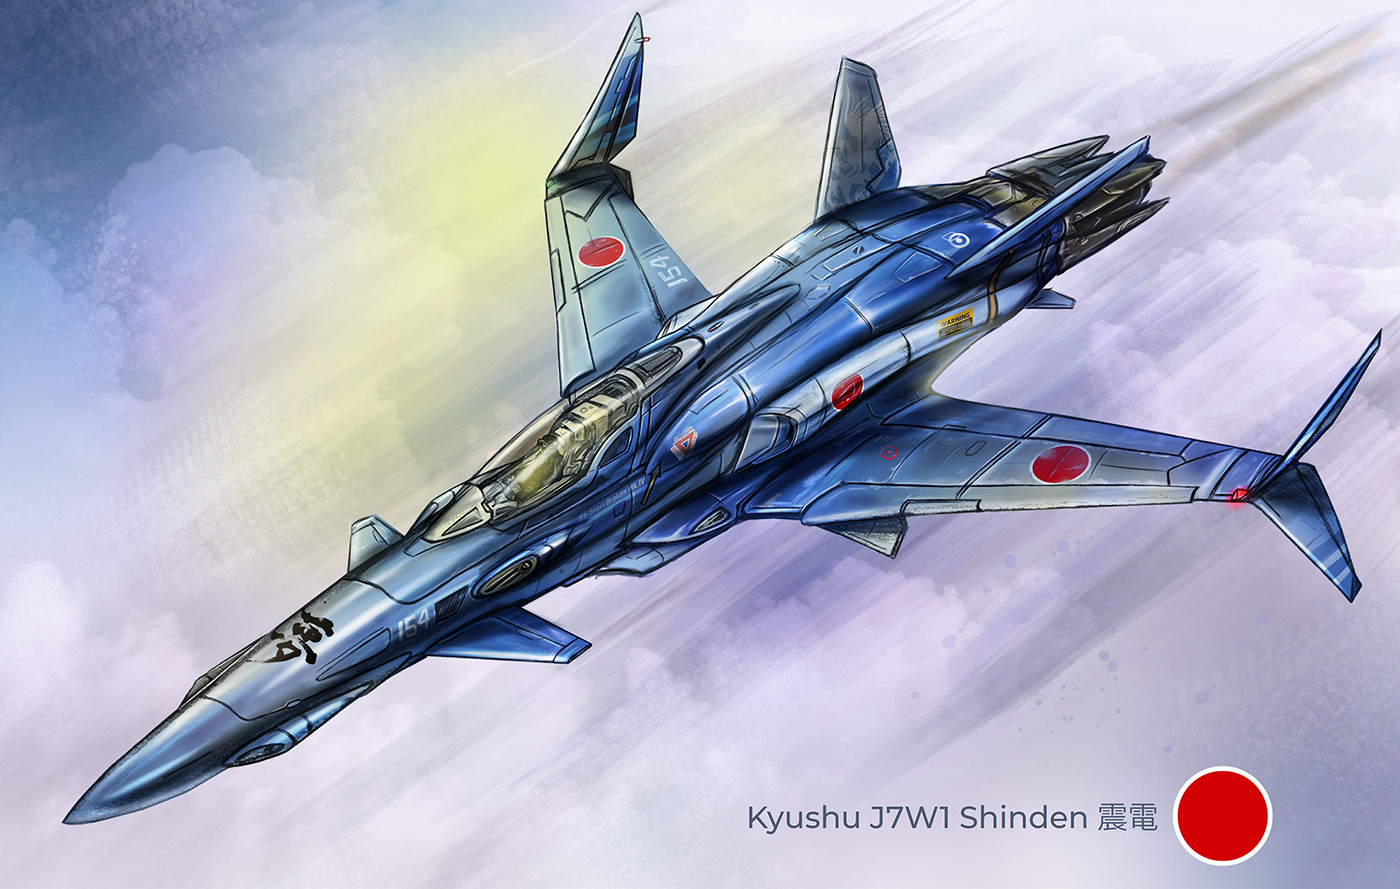 Kyushu J7W1 Shinden 震電 Fighter Aircraft SKY future 1945 sci-fi fighter aircraft avion